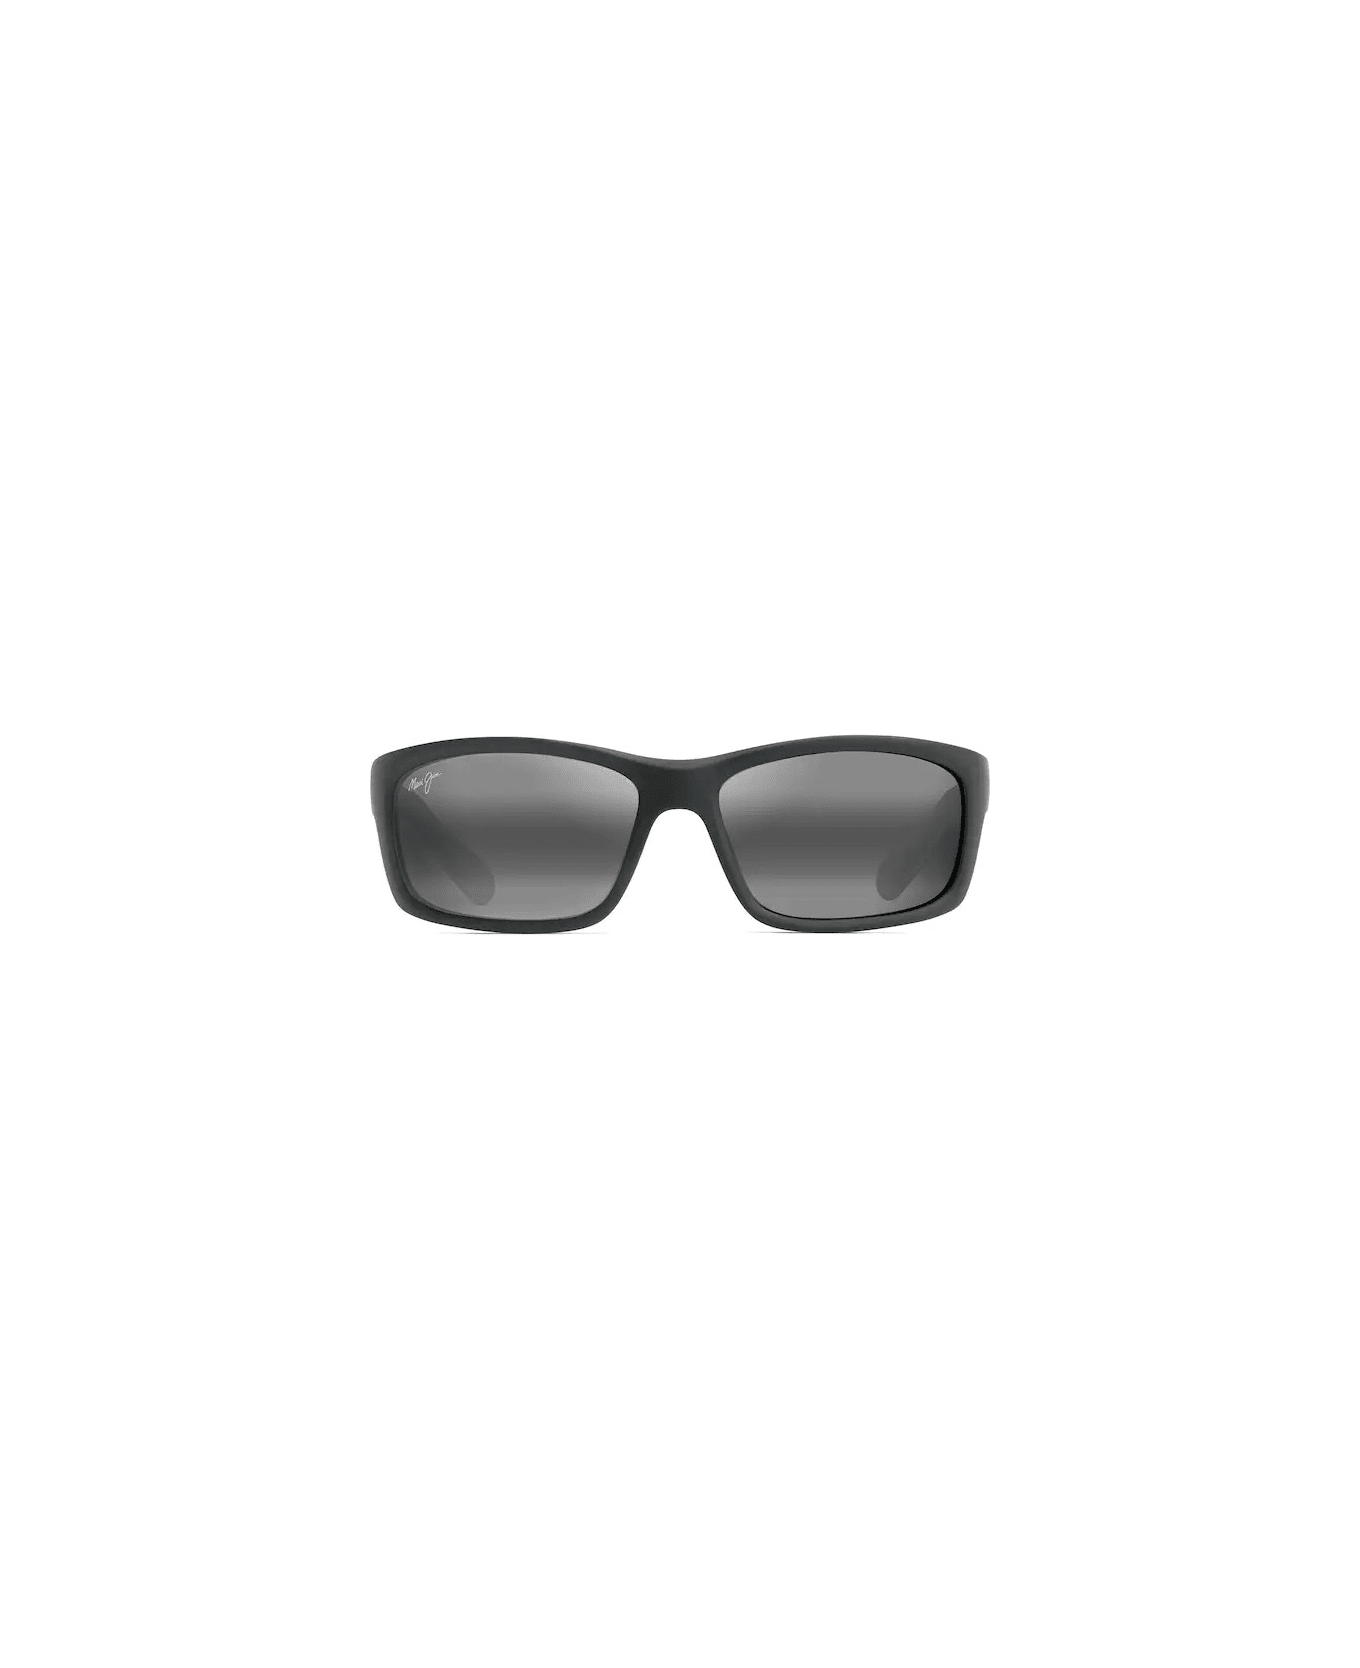 Maui Jim 766-02MD Sunglasses - Black